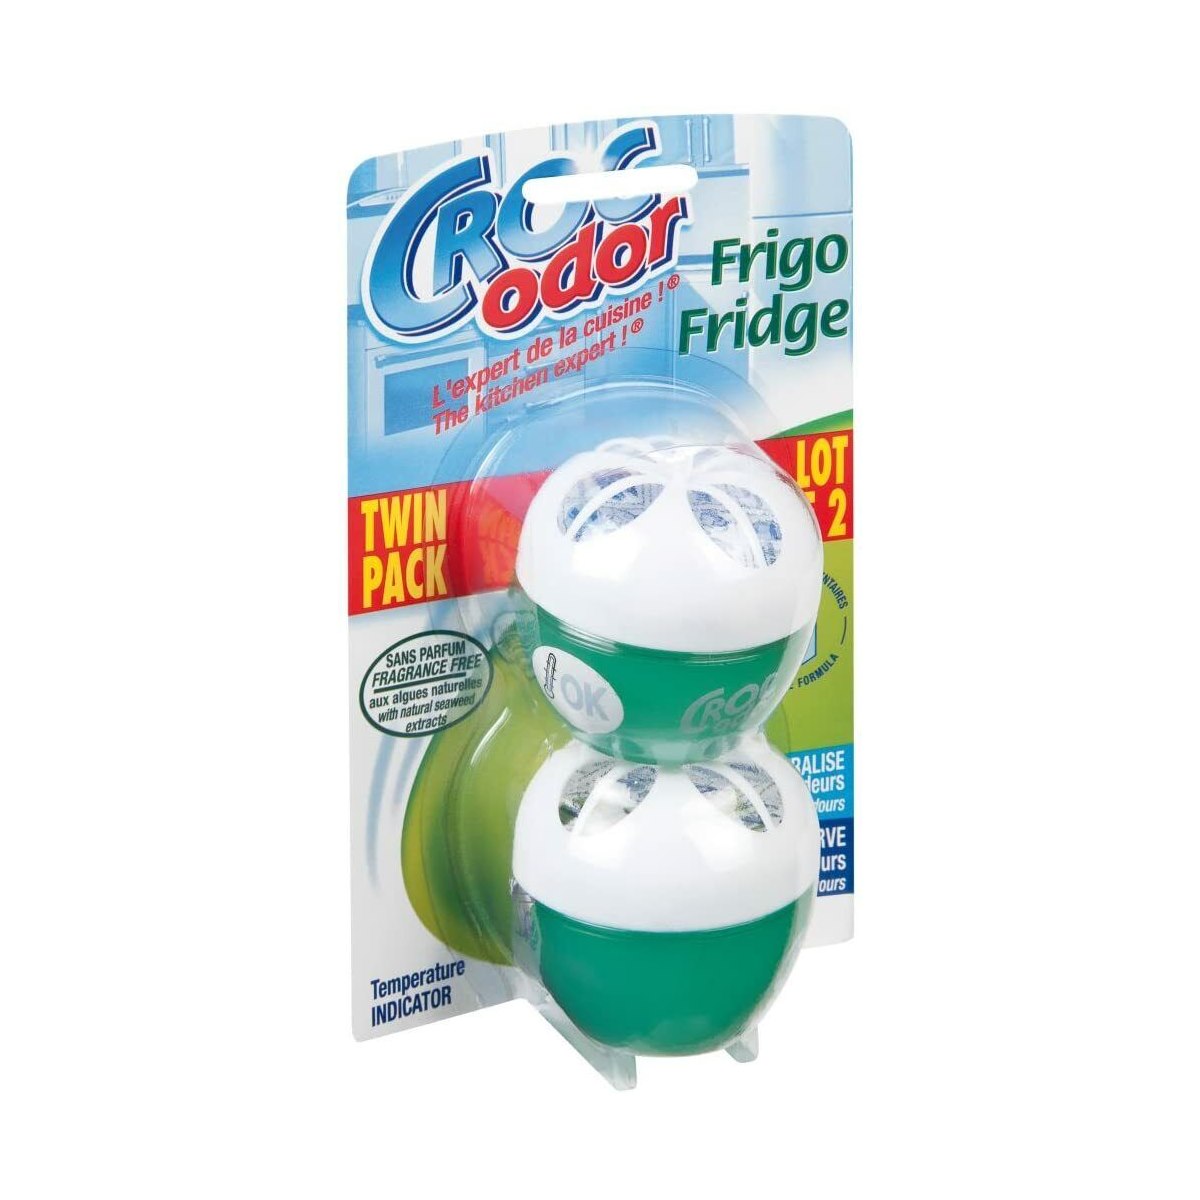 Croc Odor Fridge Deodorizer Twin Pack